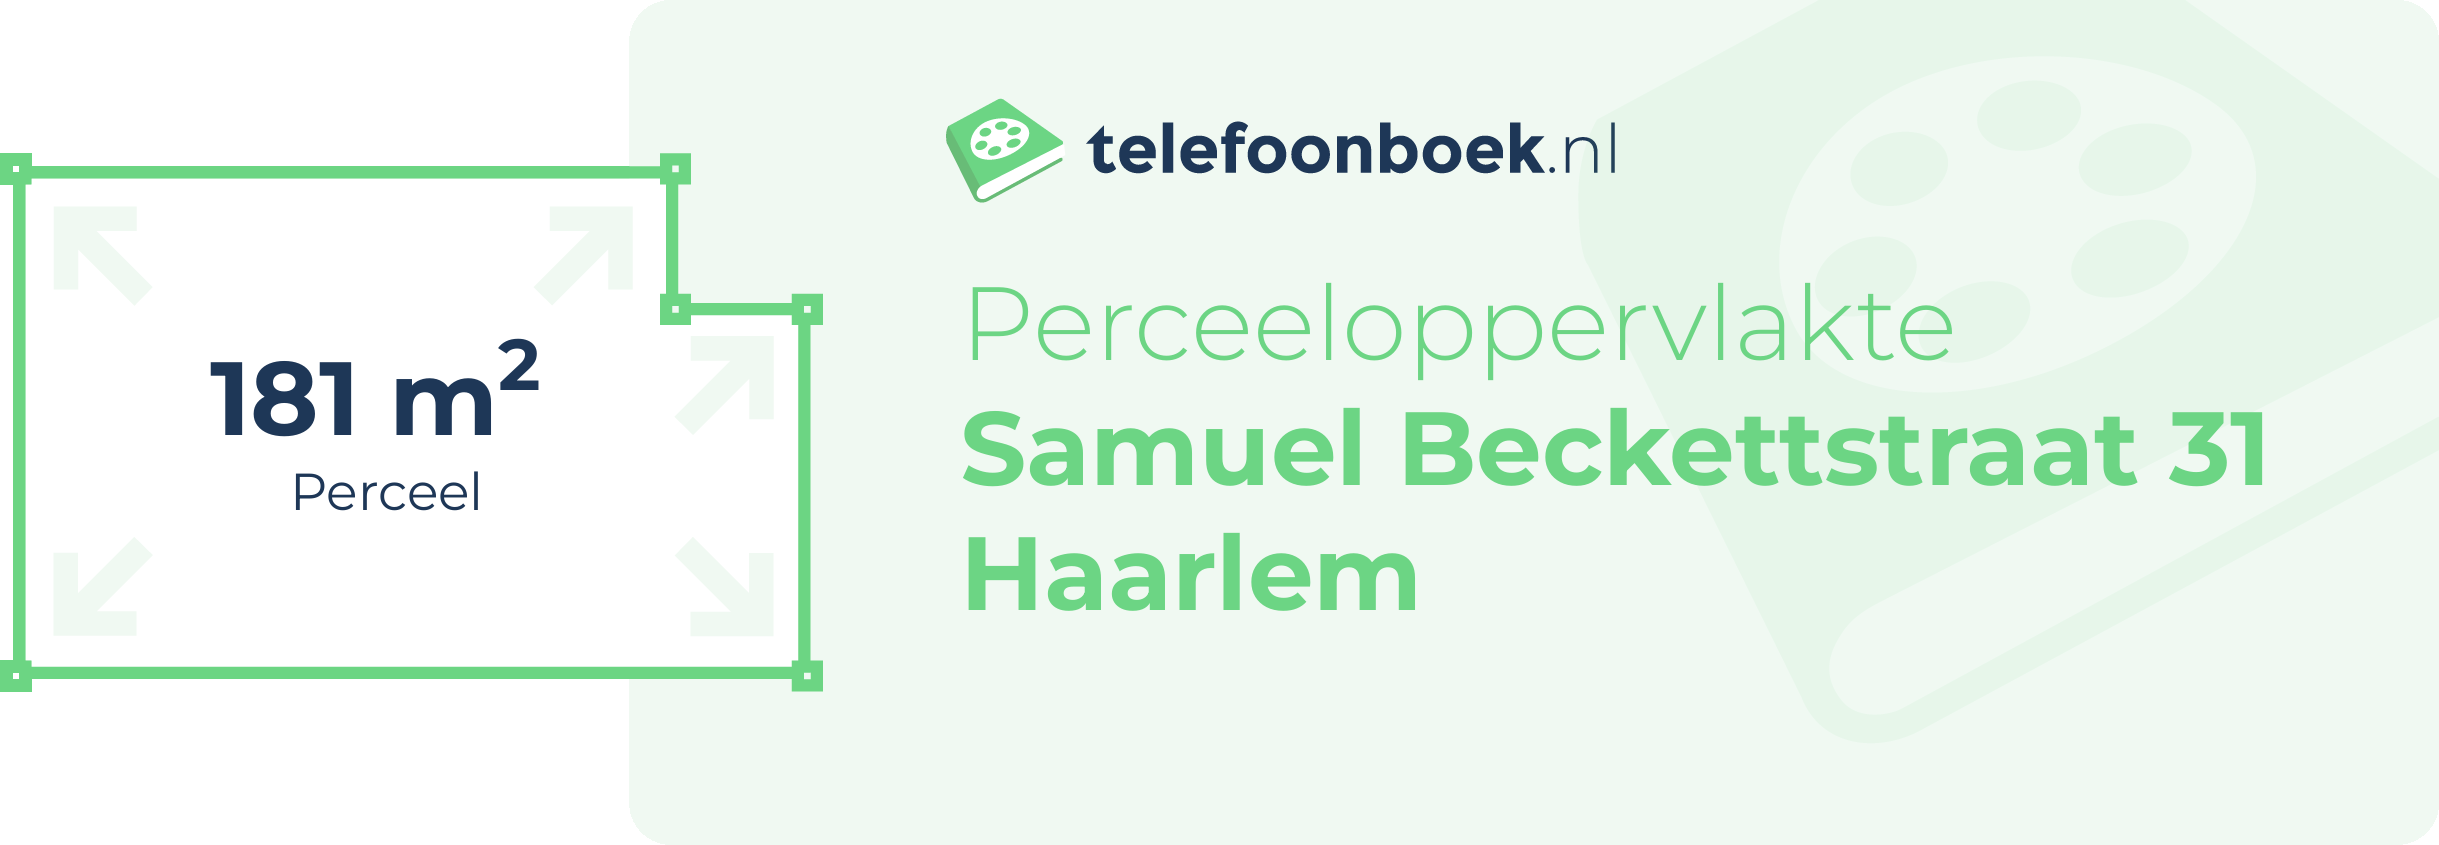 Perceeloppervlakte Samuel Beckettstraat 31 Haarlem